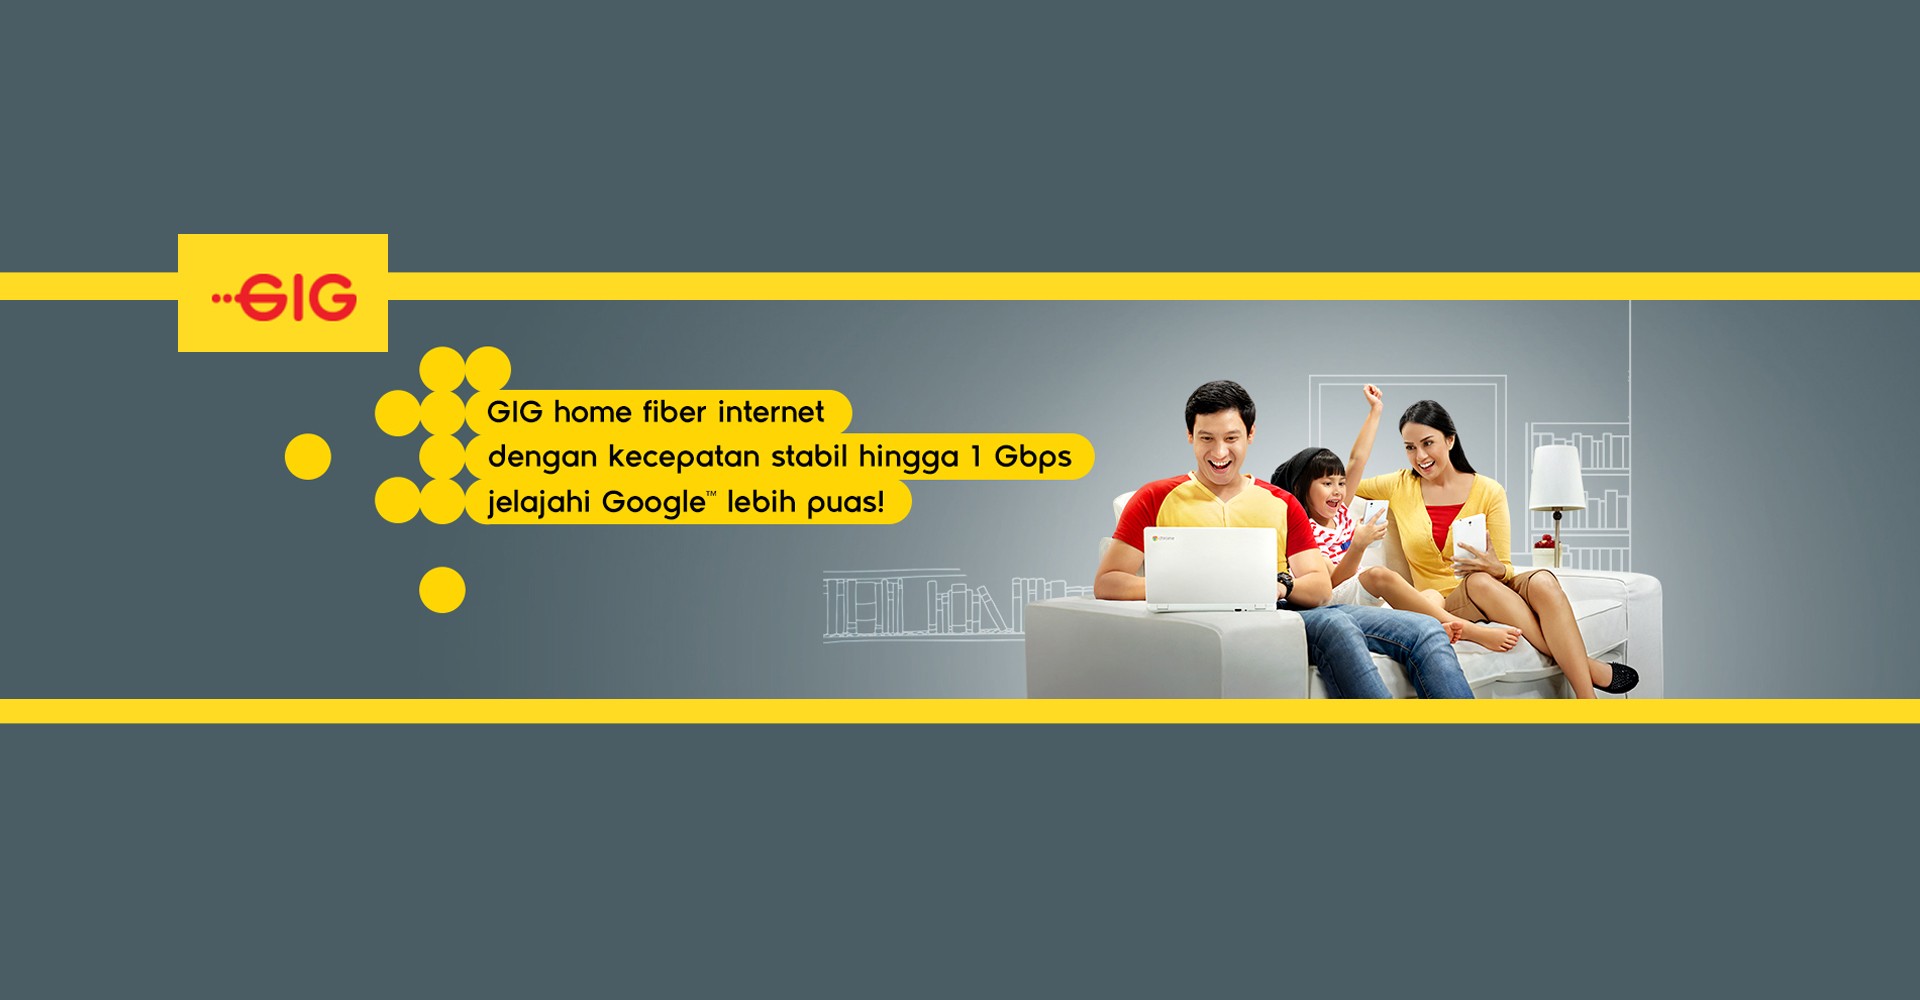 Daftar Harga dan Paket Indosat Ooredoo GIG. Layanan Internet Unlimited Tanpa Batas Kuota FUP ...